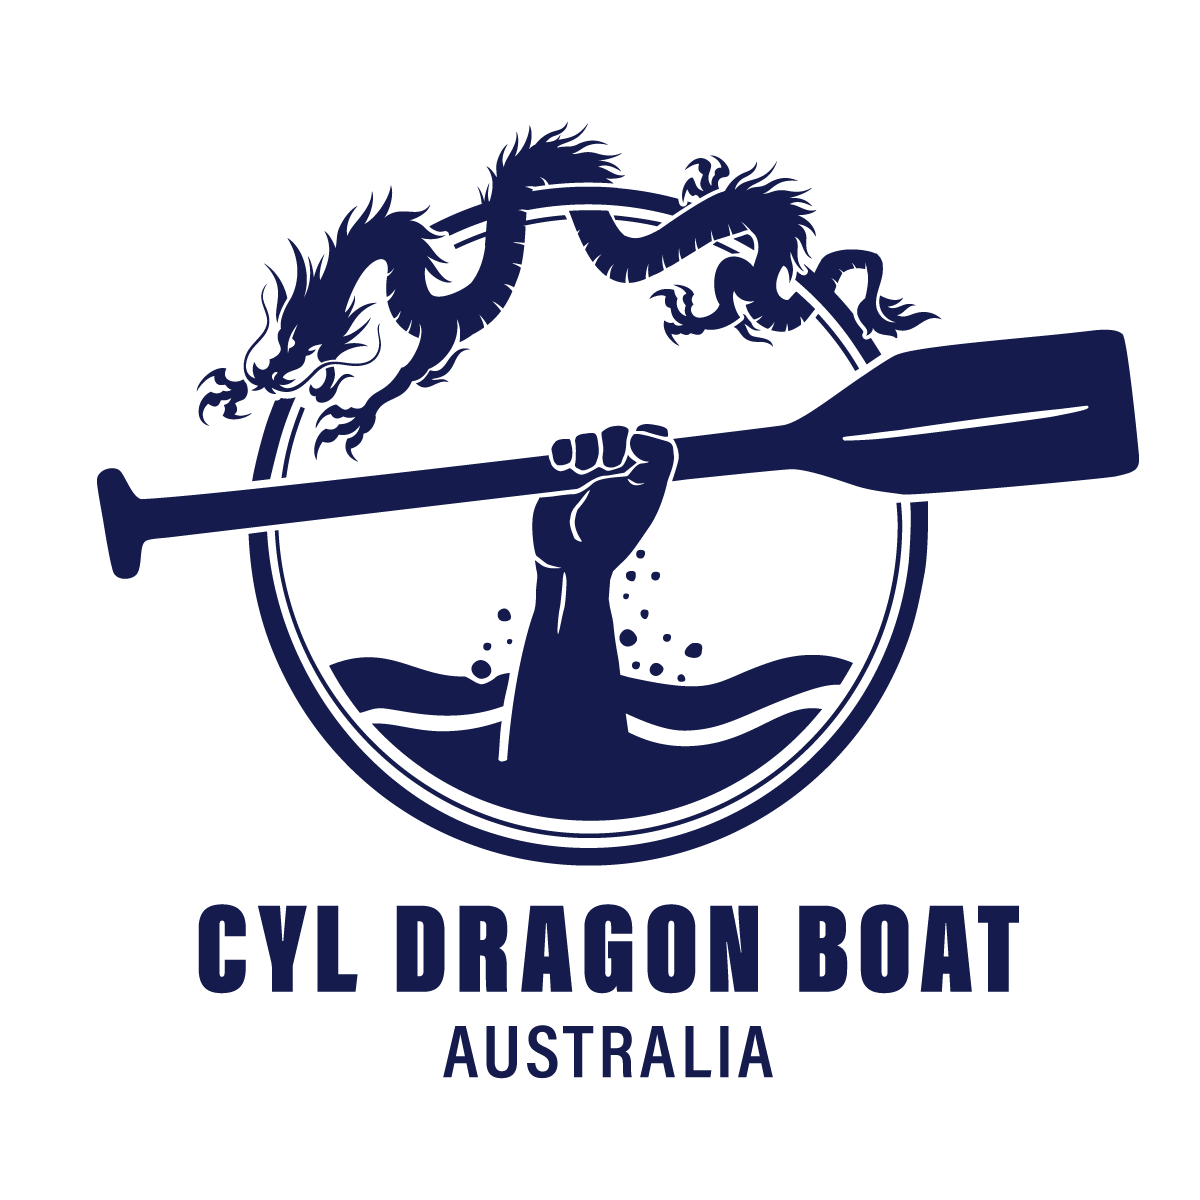 CYL DRAGON BOAT AUSTRALIA